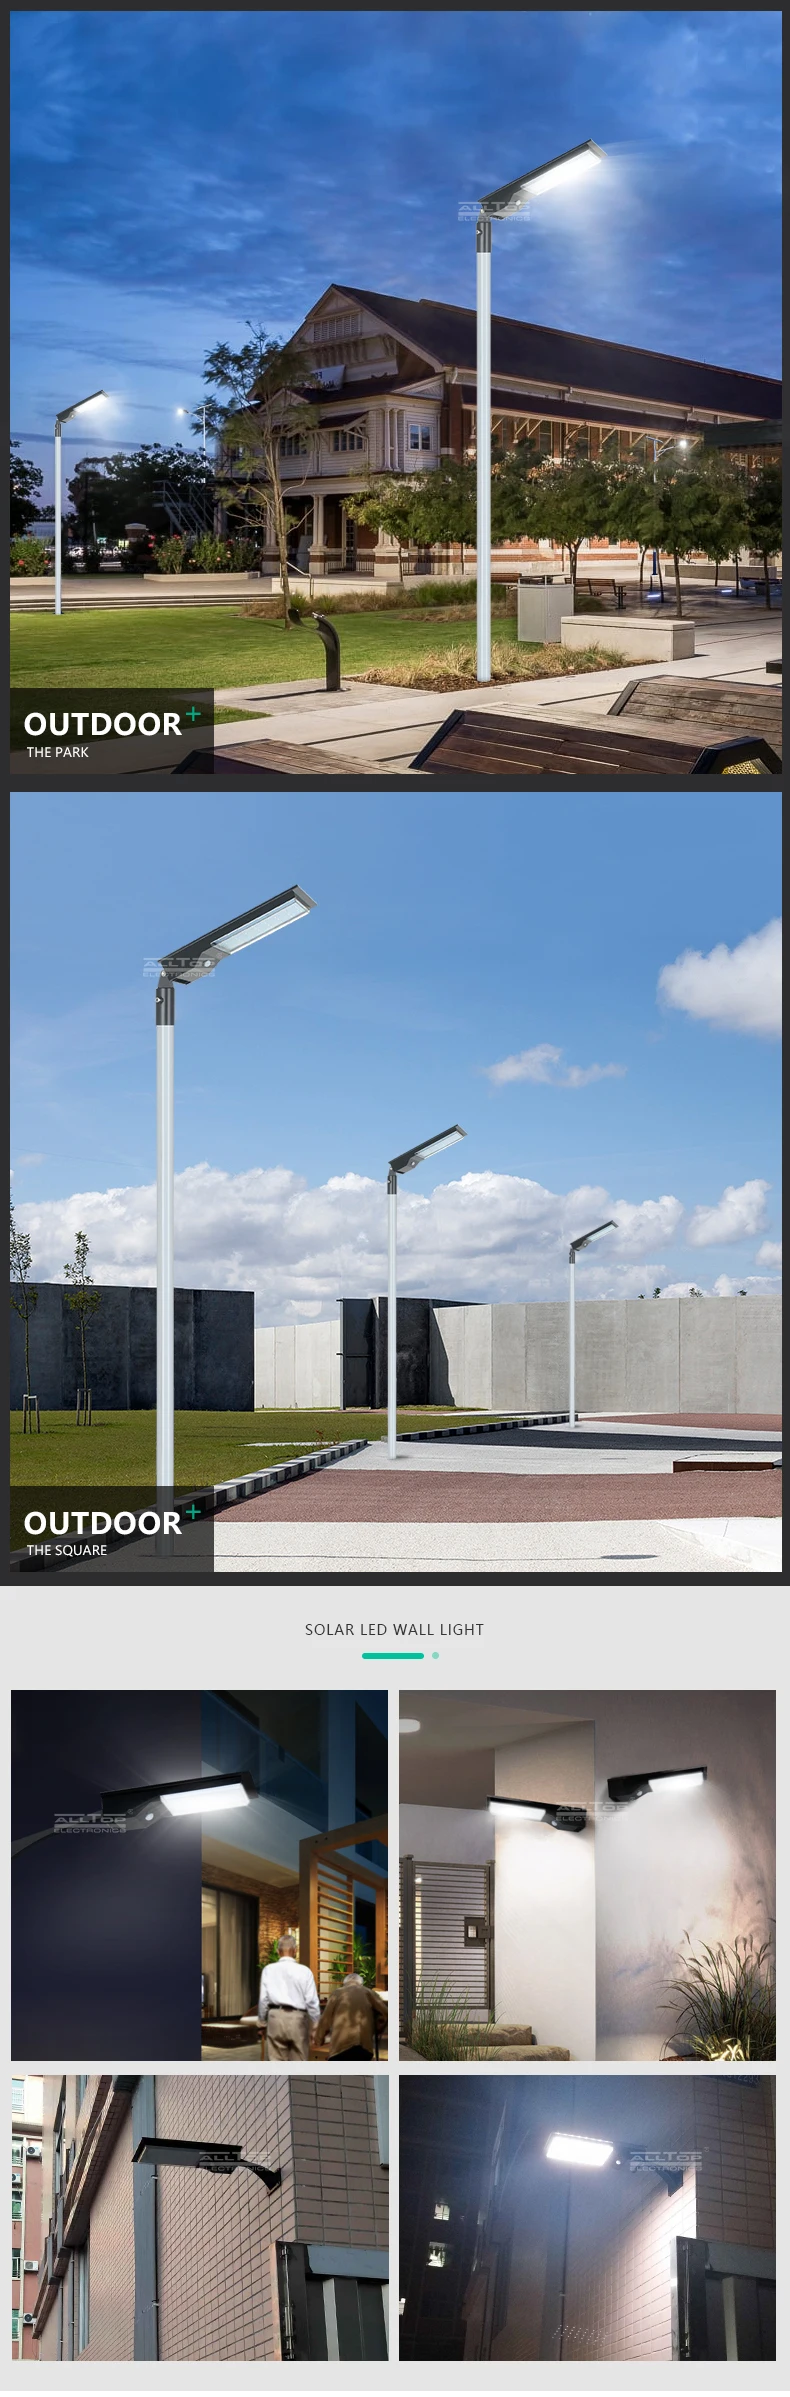 ALLTOP High quality waterproof outdoor lighting ip65 smd 9w 14w led solar street light